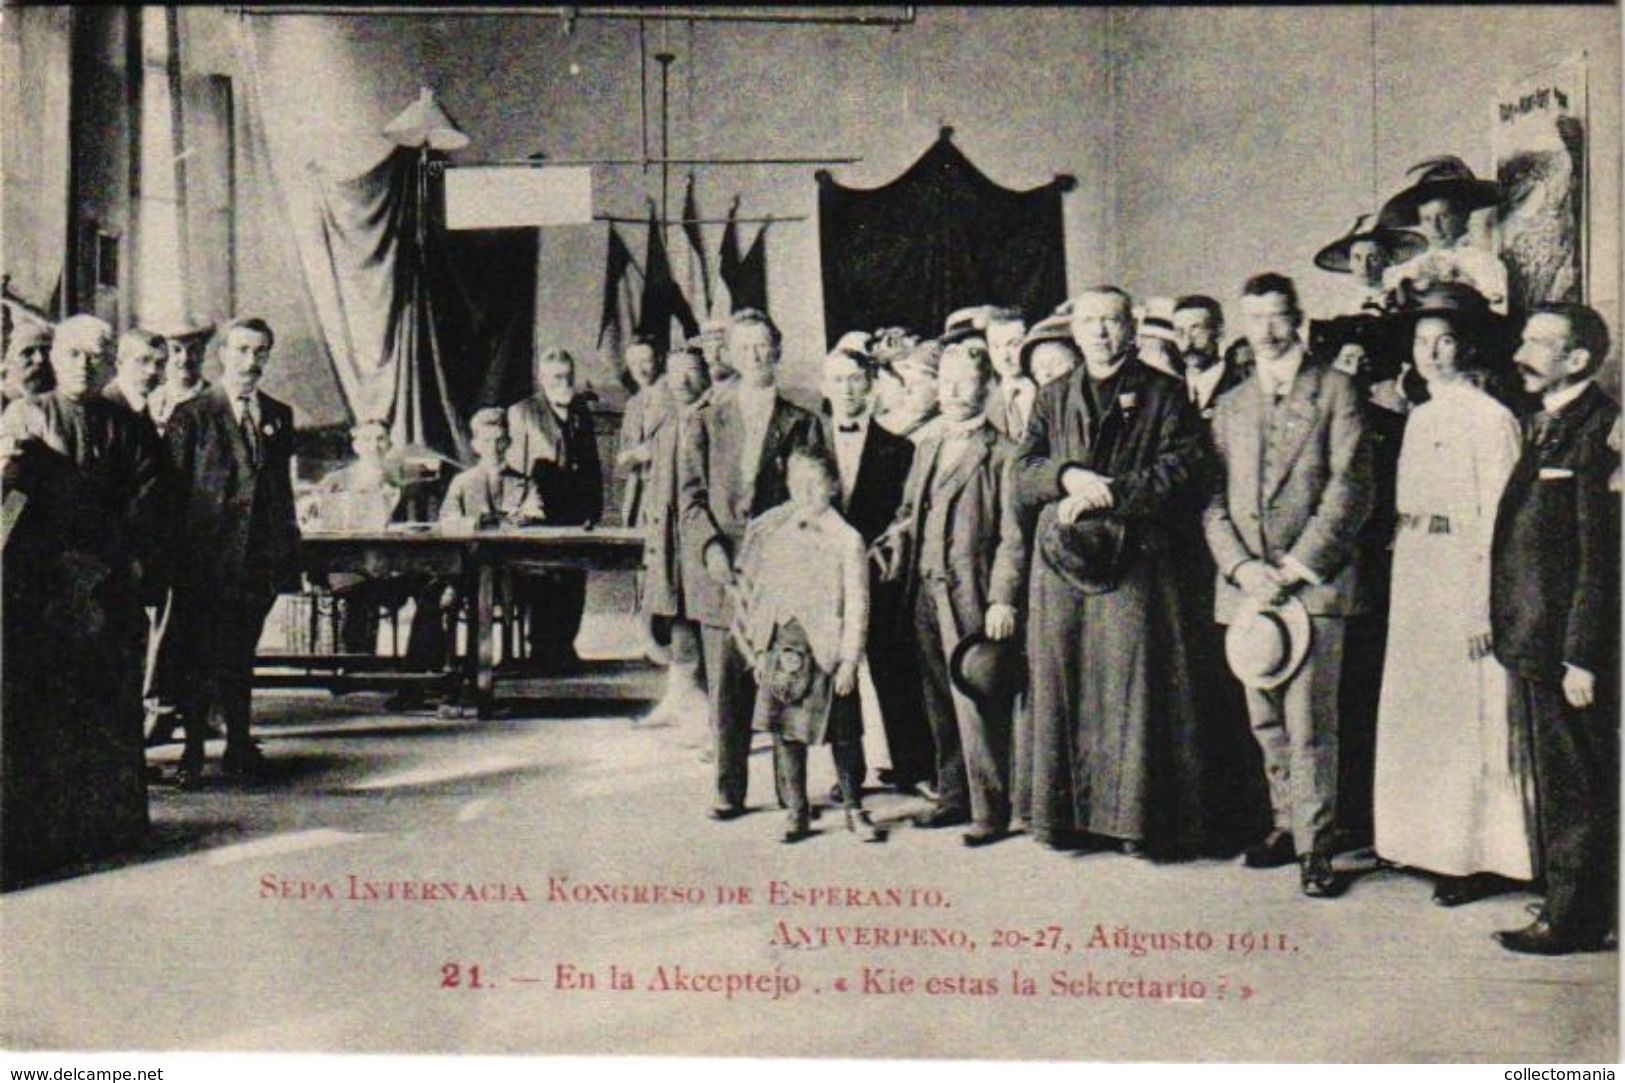 24 Postcards SET Esperanto Kongreso Antverpeno 1911 Croix Rouge Ruga Kruco  American German Russian French  Group - Esperanto